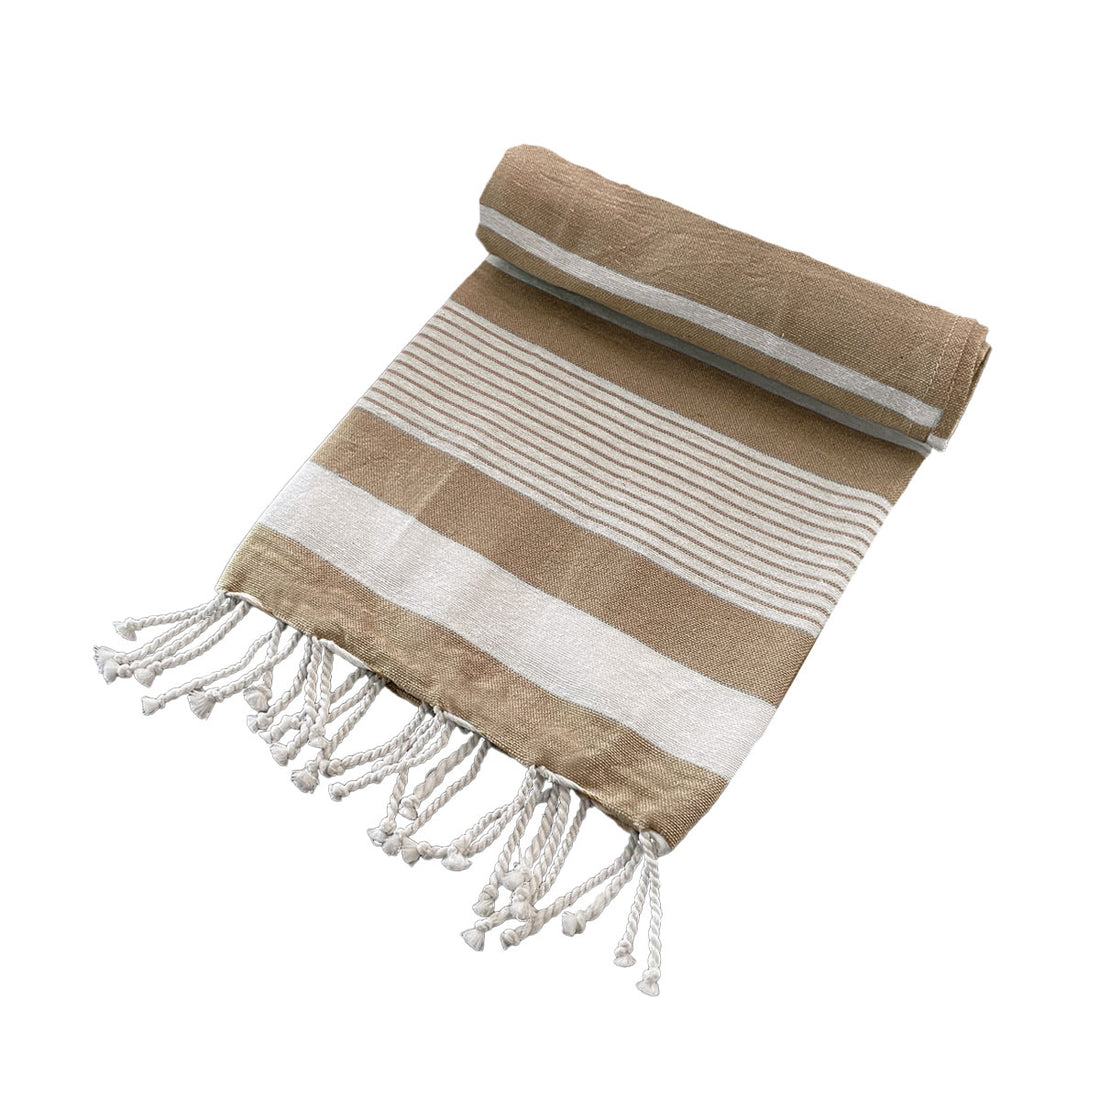 Cotton Rich Large Turkish Beach Towel with Tassels 80cm x 155cm Brown-Home &amp; Garden &gt; Bathroom Accessories-PEROZ Accessories